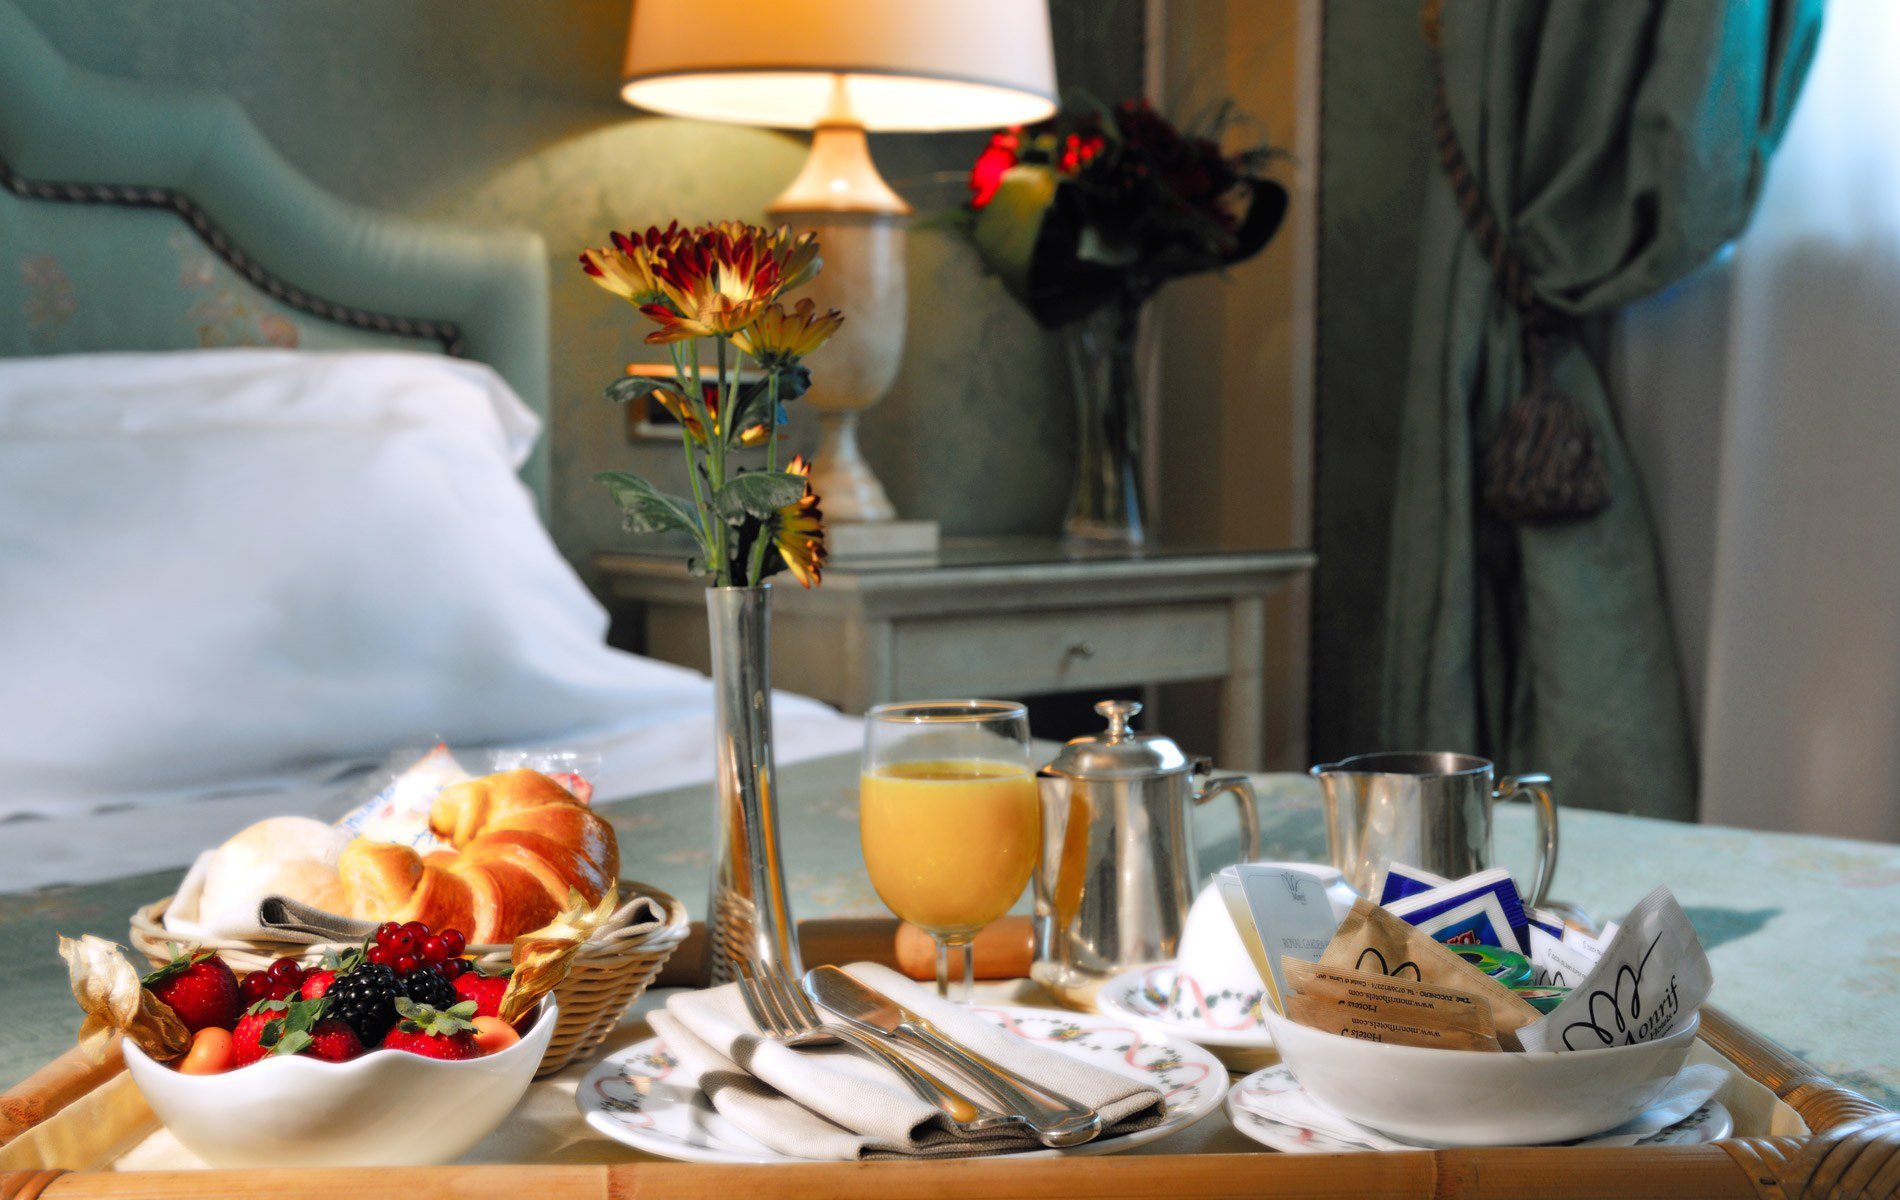 Room service 2024. Завтрак в номер в гостинице. Завтрак в отеле рум сервис. Сервировка стола рум сервис. Обслуживание в номерах.